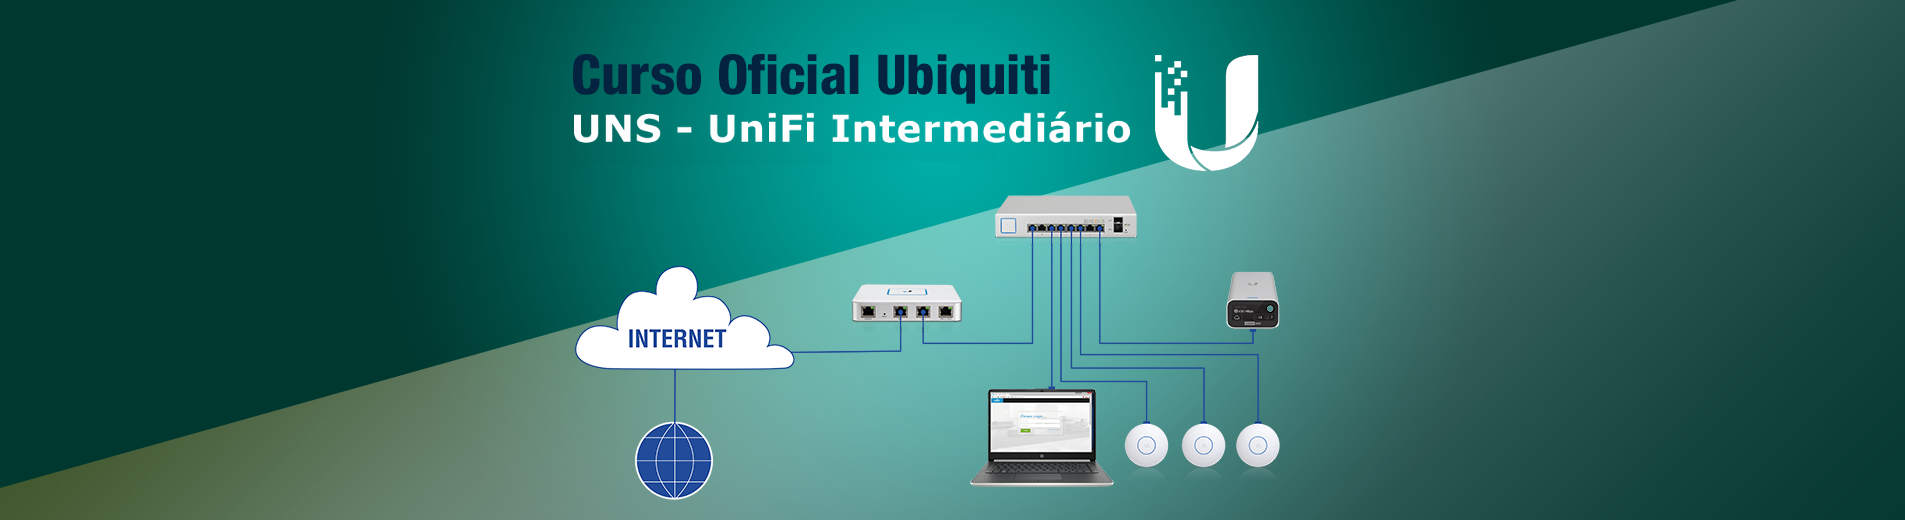 Ubiquiti UniFi Network Specialist UNS - Intermediário